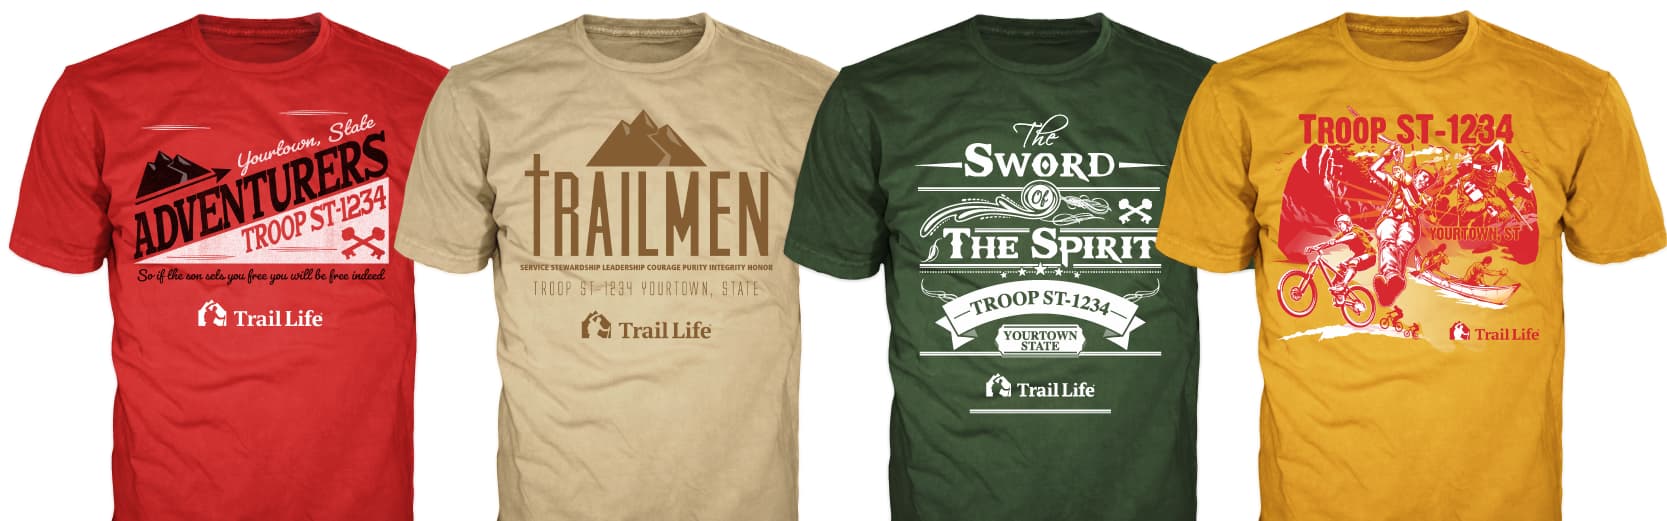 trail life custom t-shirts